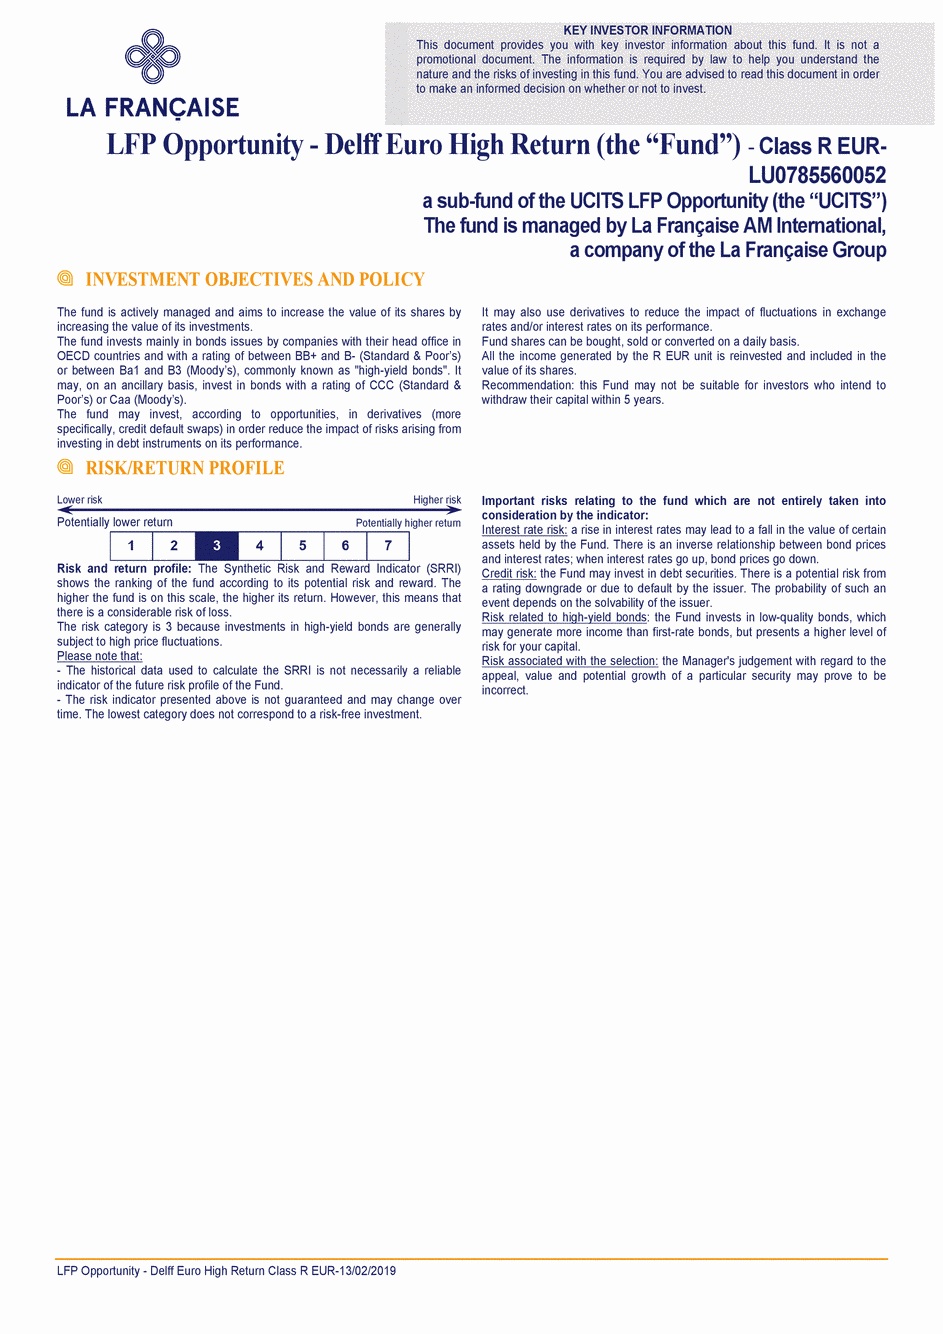 DICI LFP Opportunity - Delff Euro High Return (Classe R) - 13/02/2019 - Anglais